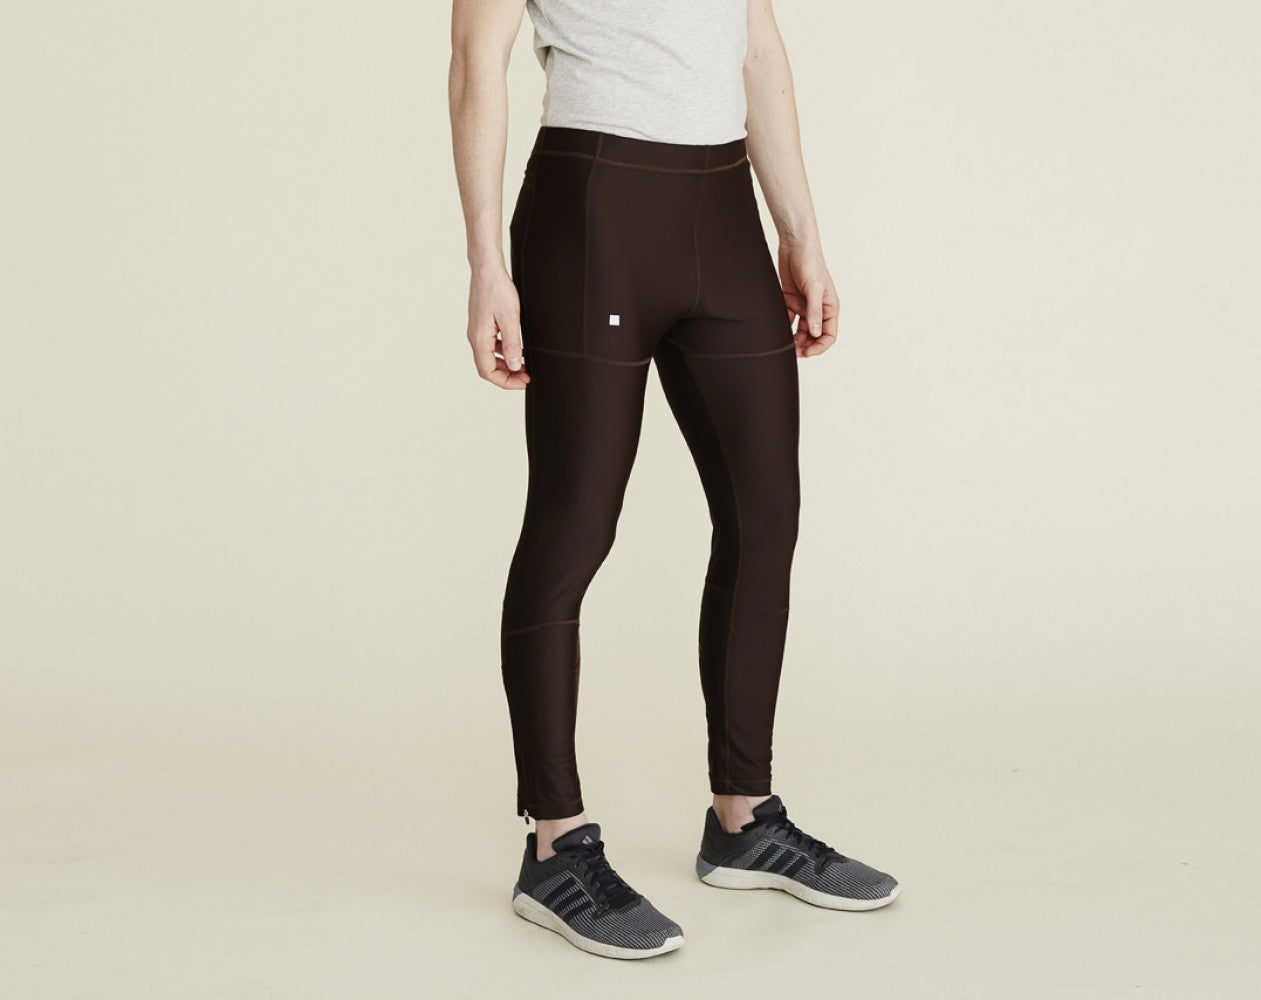 Nike Yoga Leggings - Shop on Pinterest